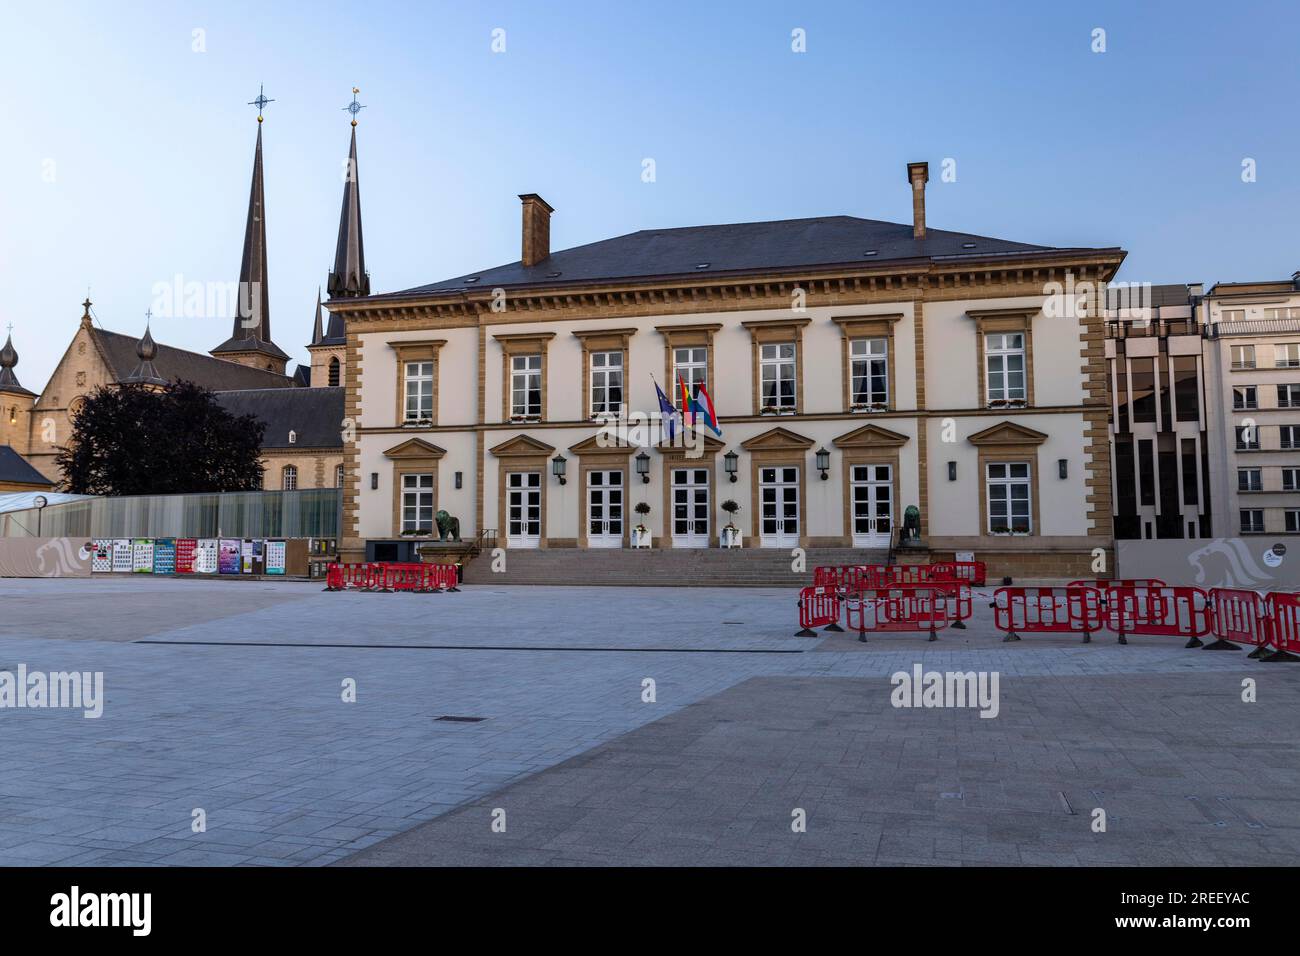 City Hall, Hotel de Ville de Luxembourg, Luxembourg Stock Photo